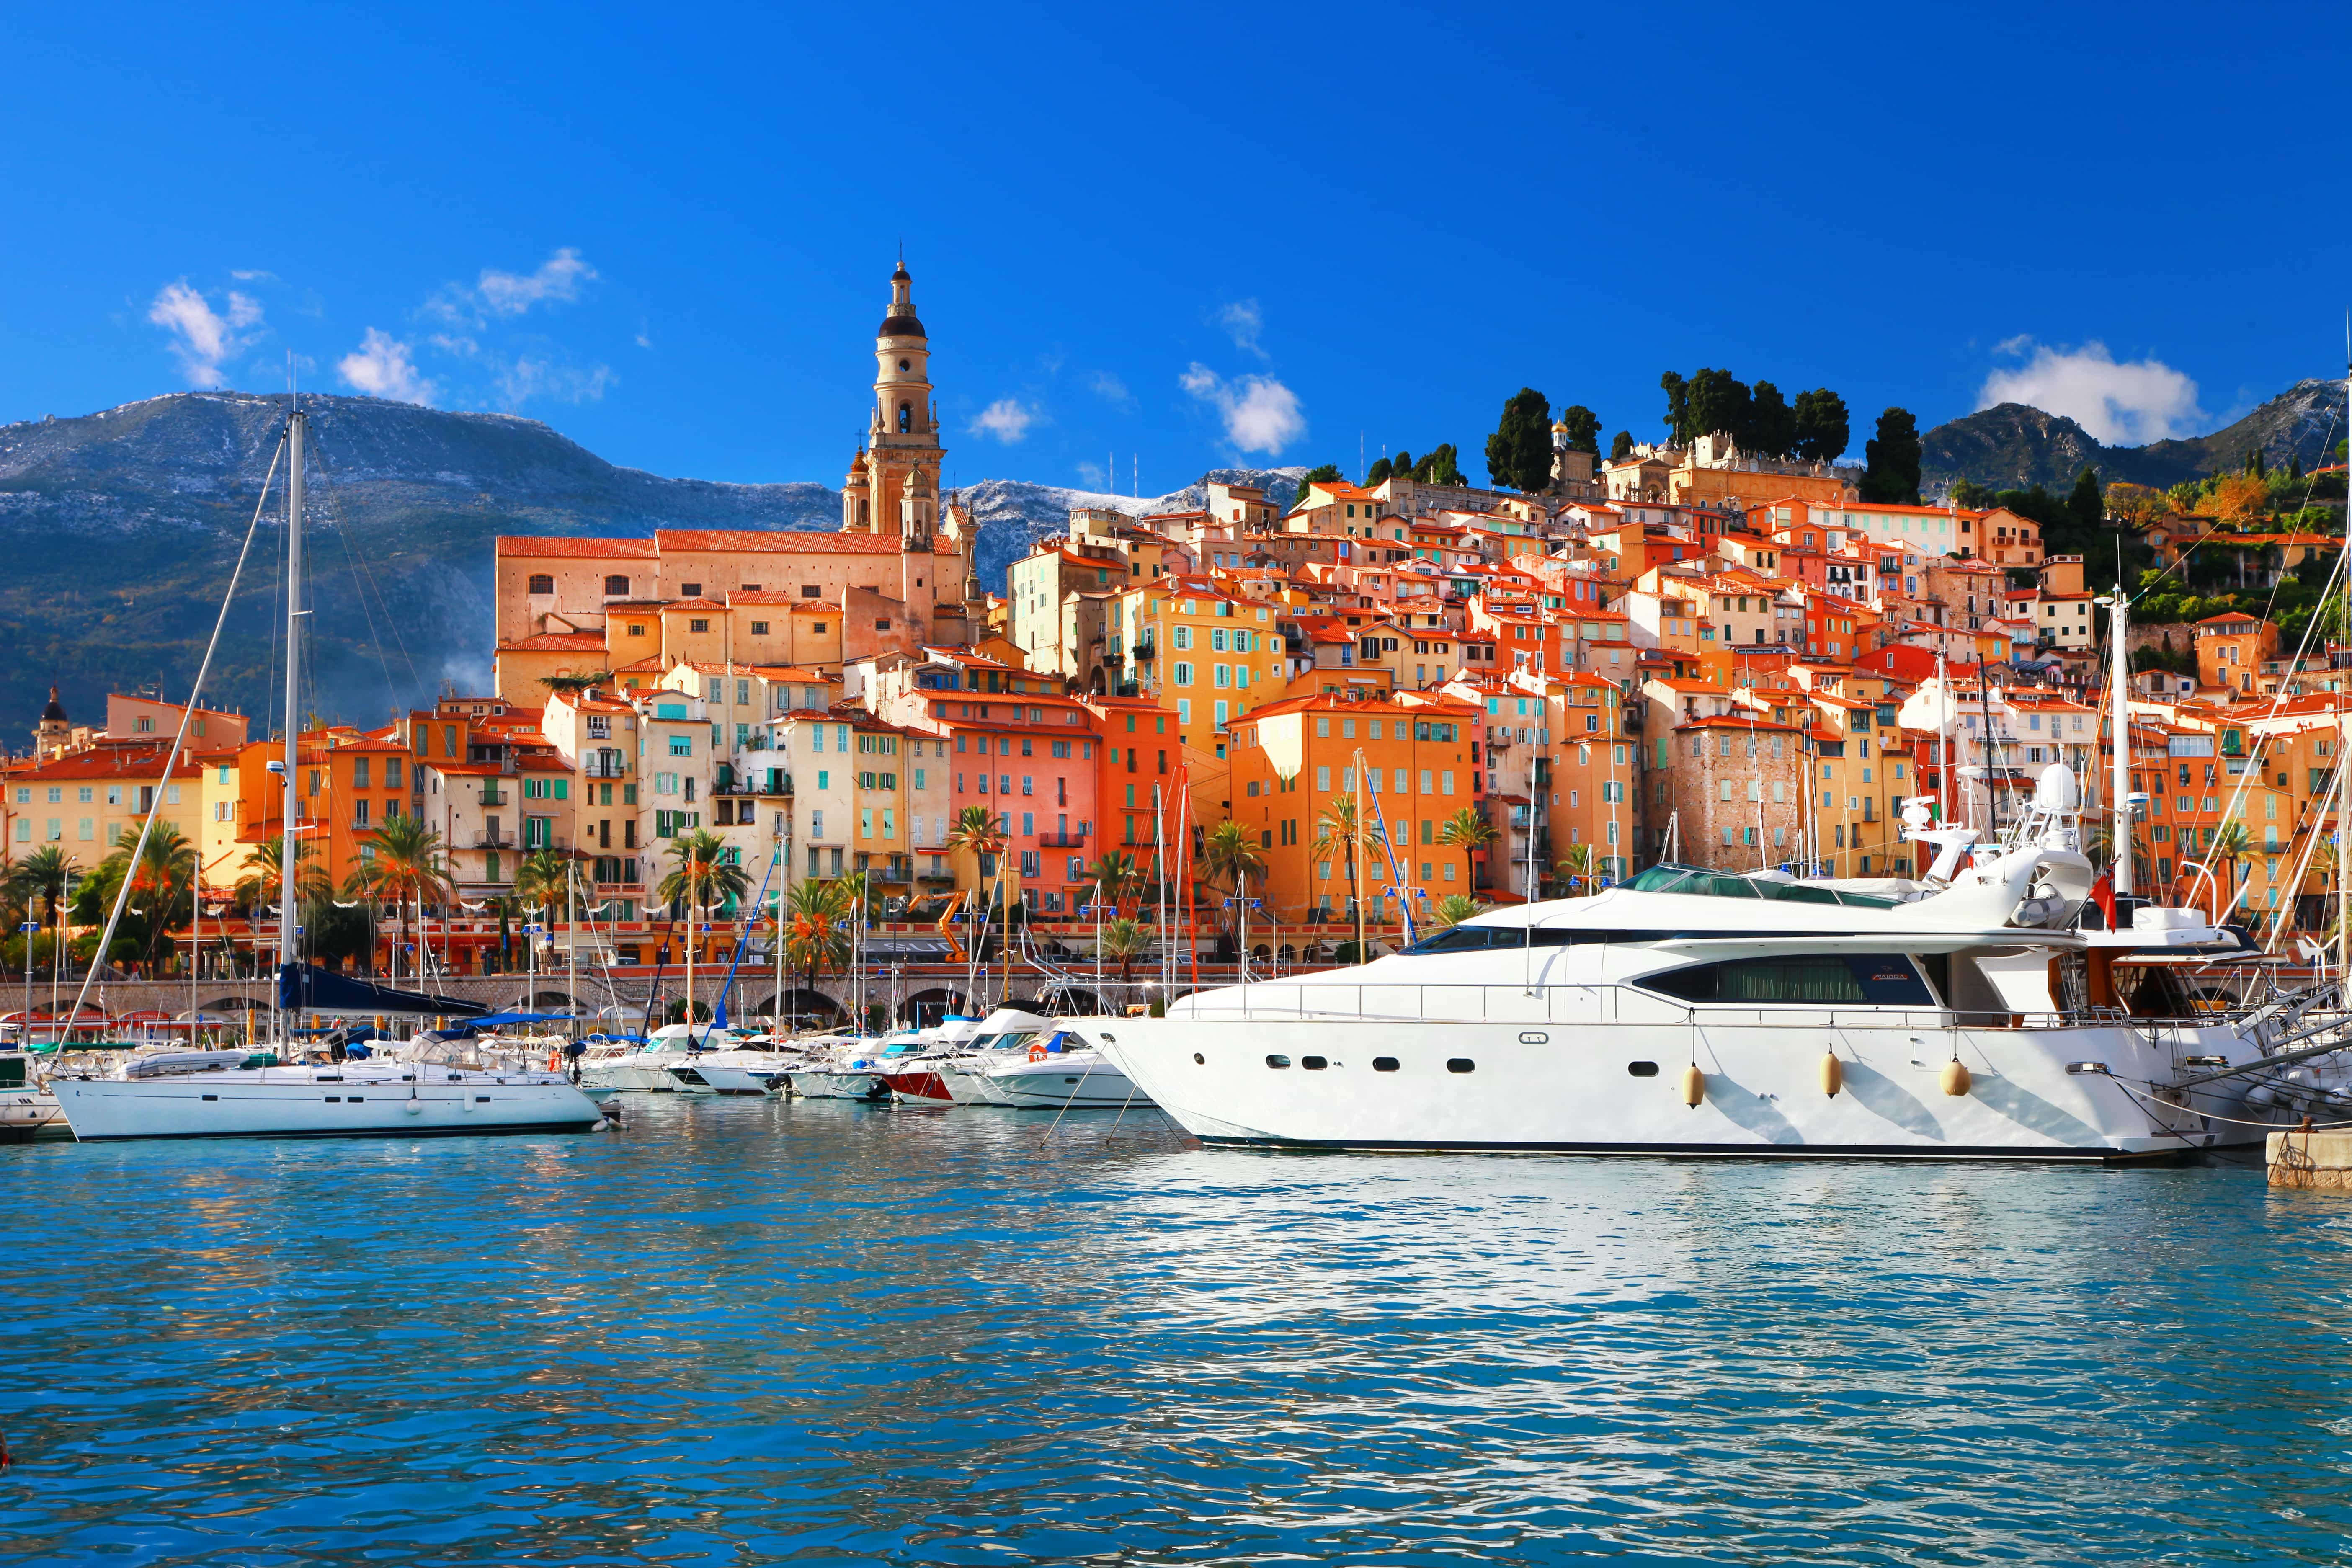 private luxury yachts in marina in Mediterranean